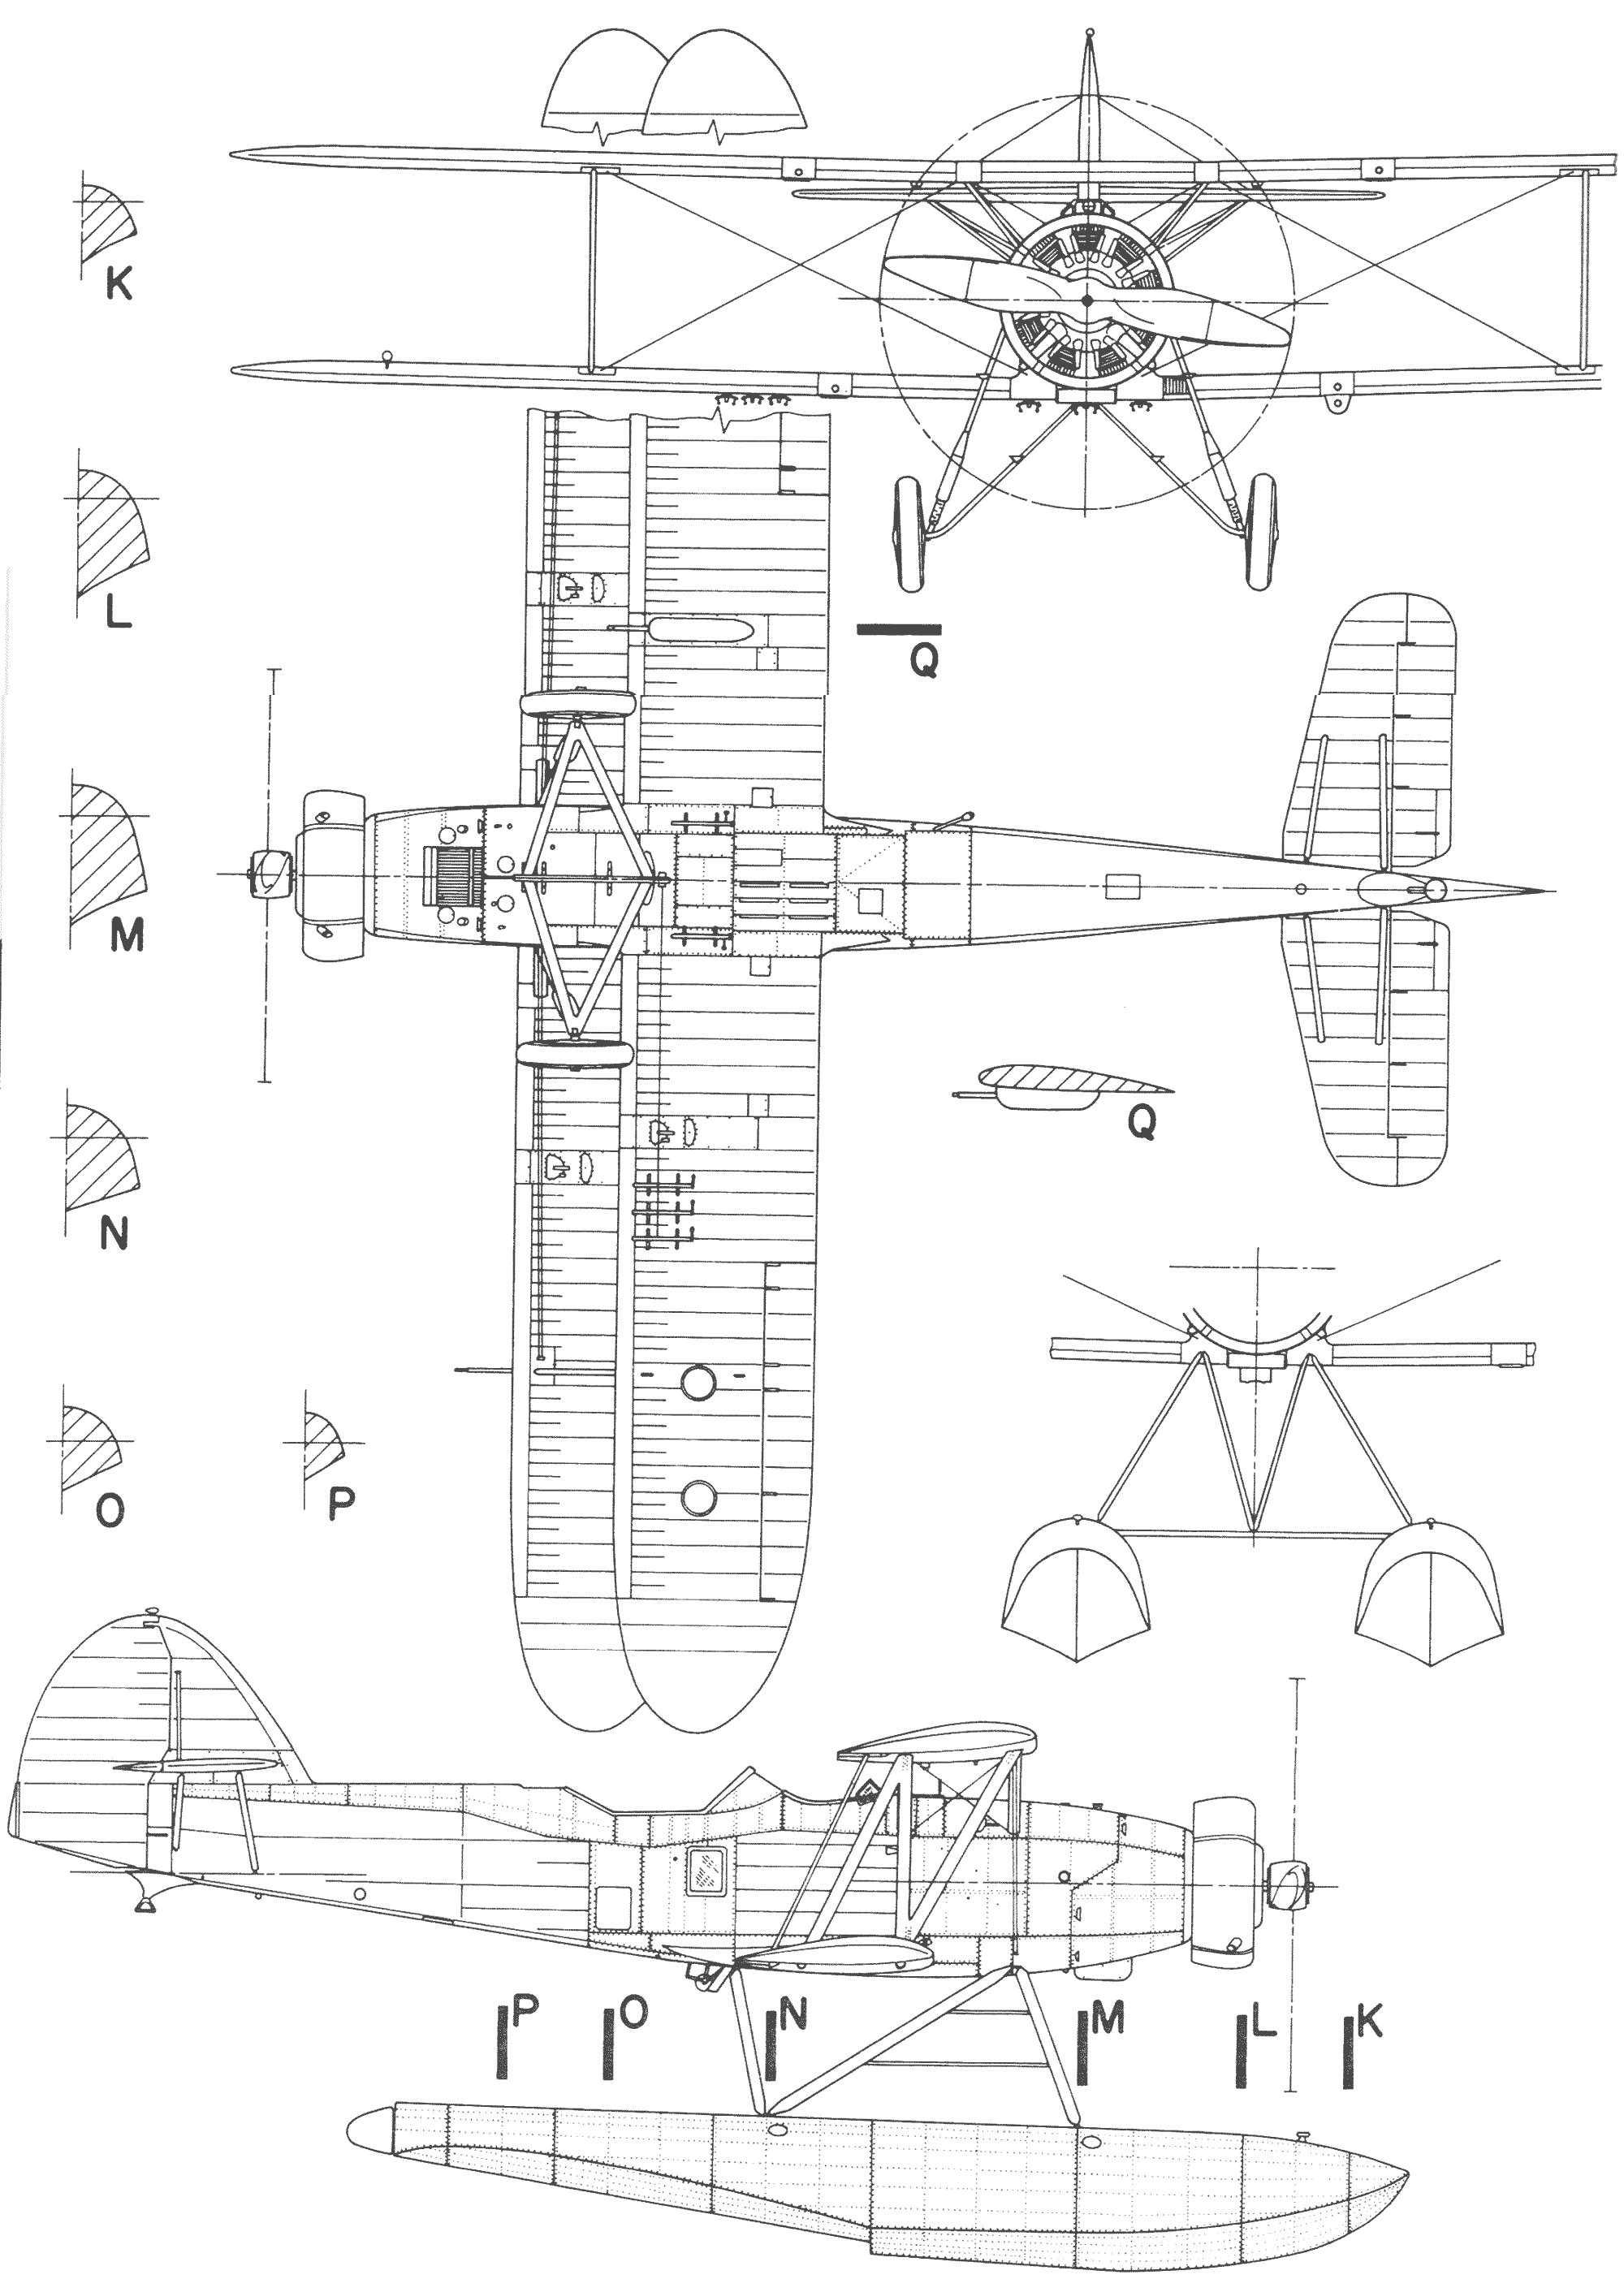 Letov S.328 blueprint